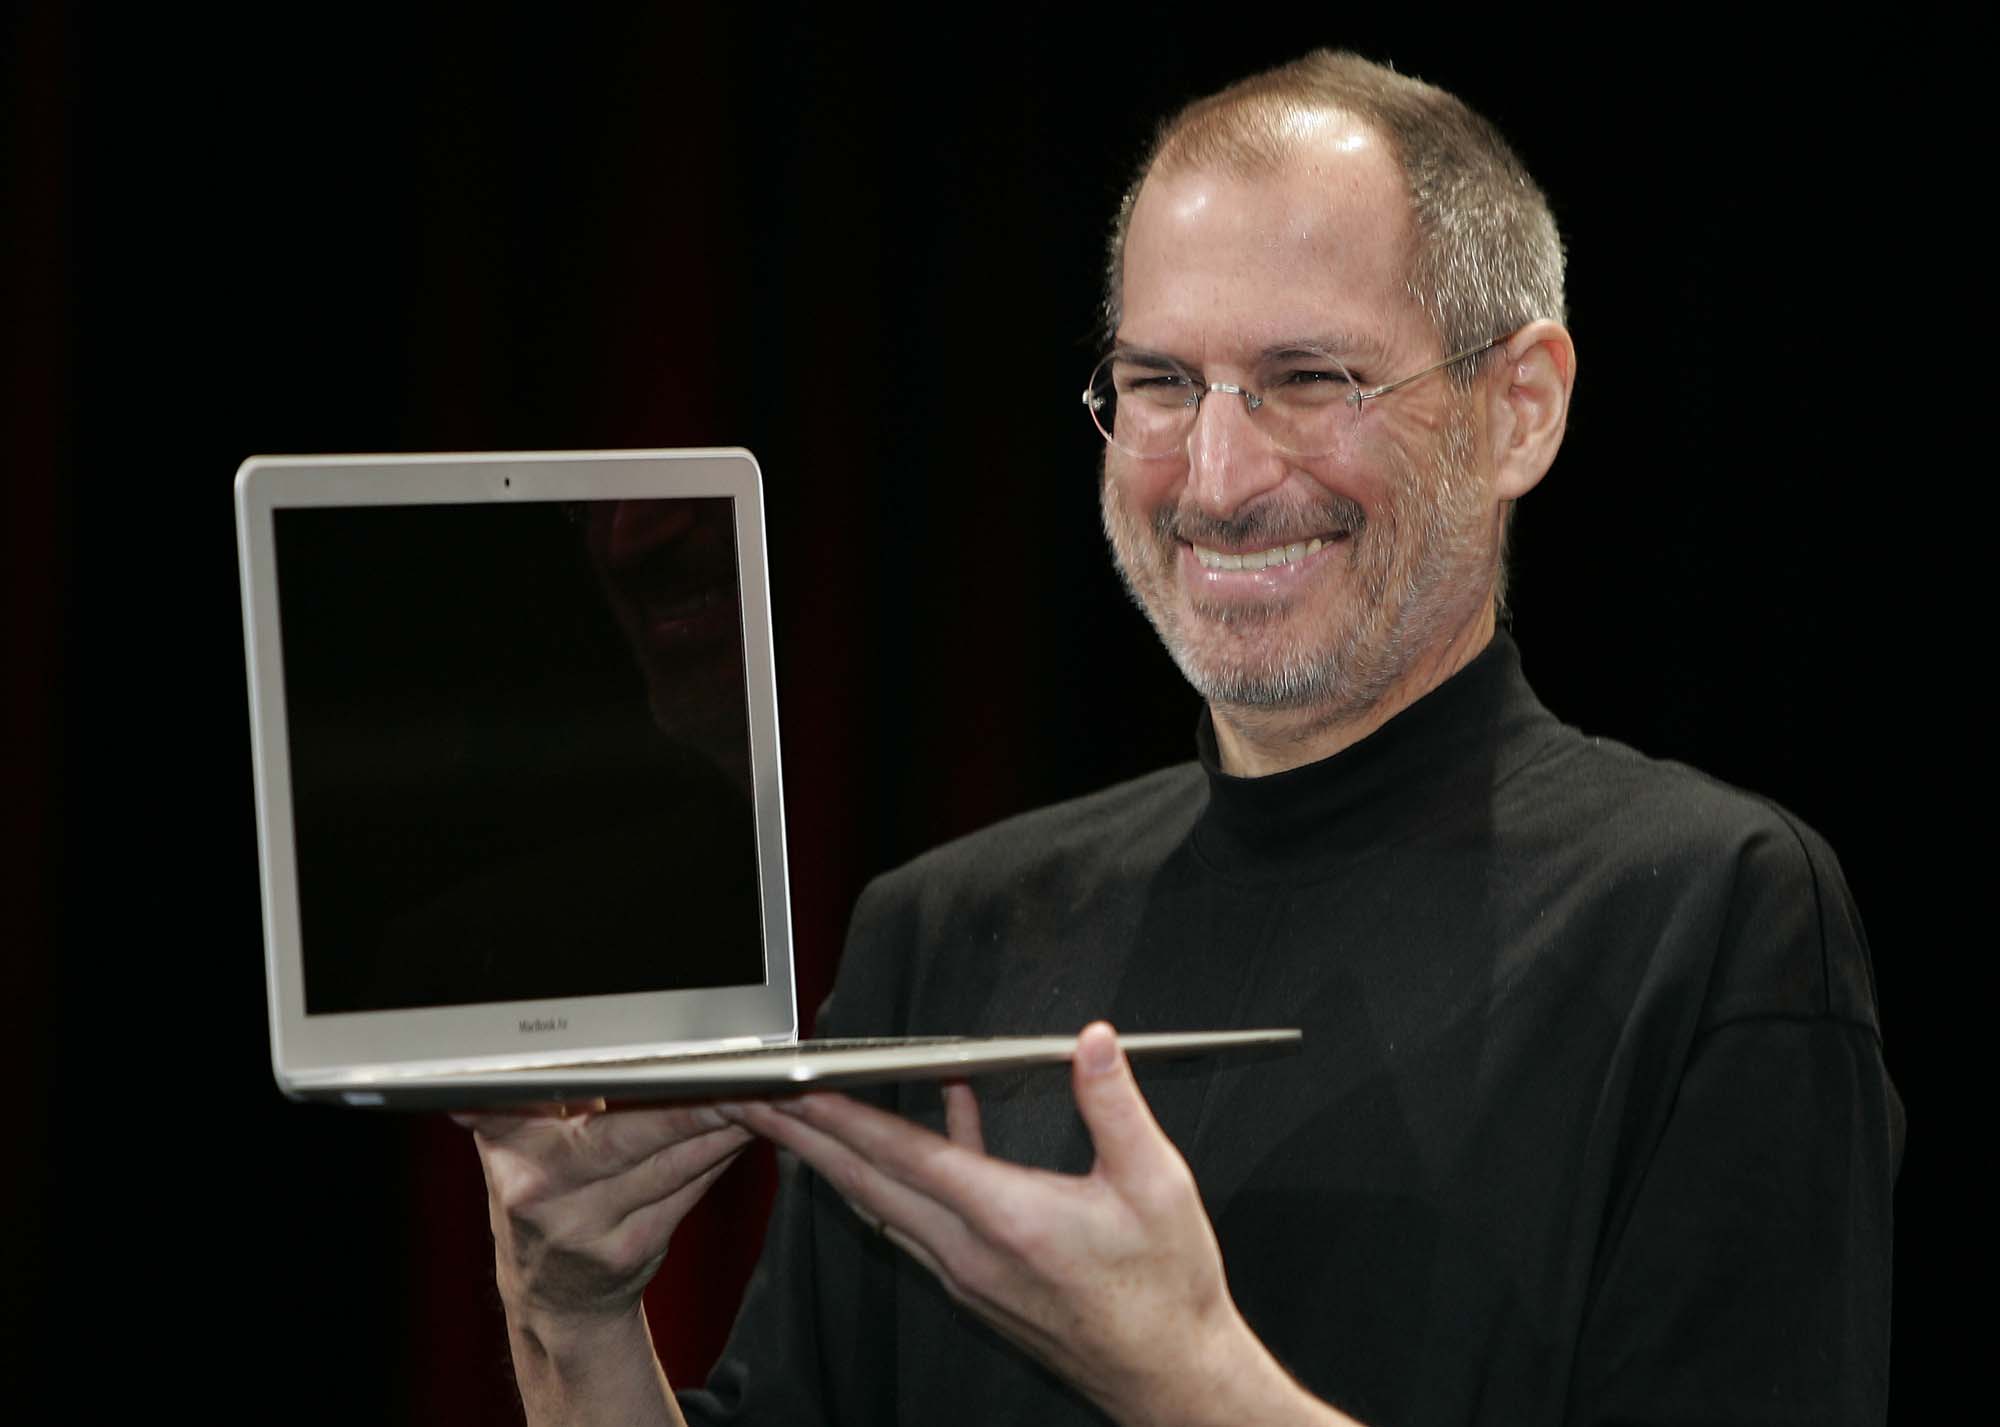 Steve Jobs unveils the Macbook Air in 2008